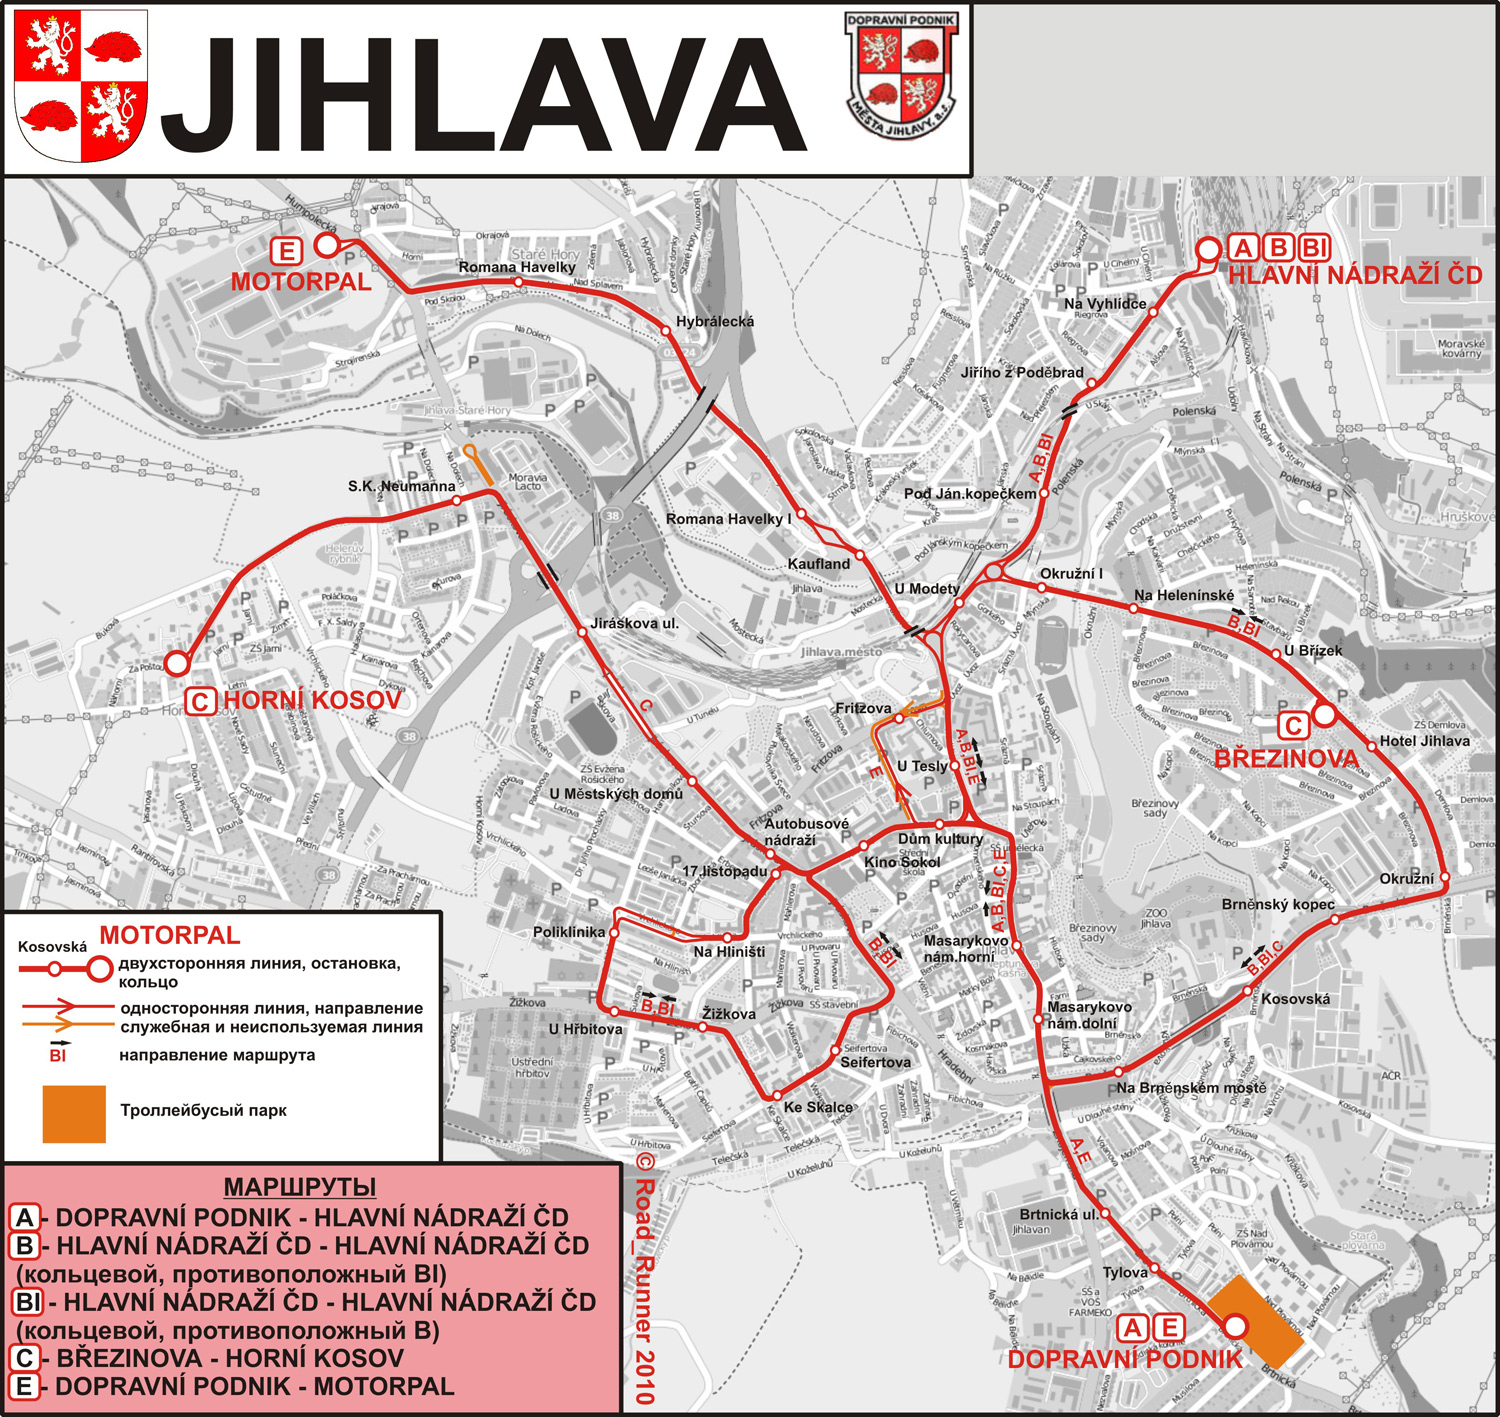 Jihlava — Maps